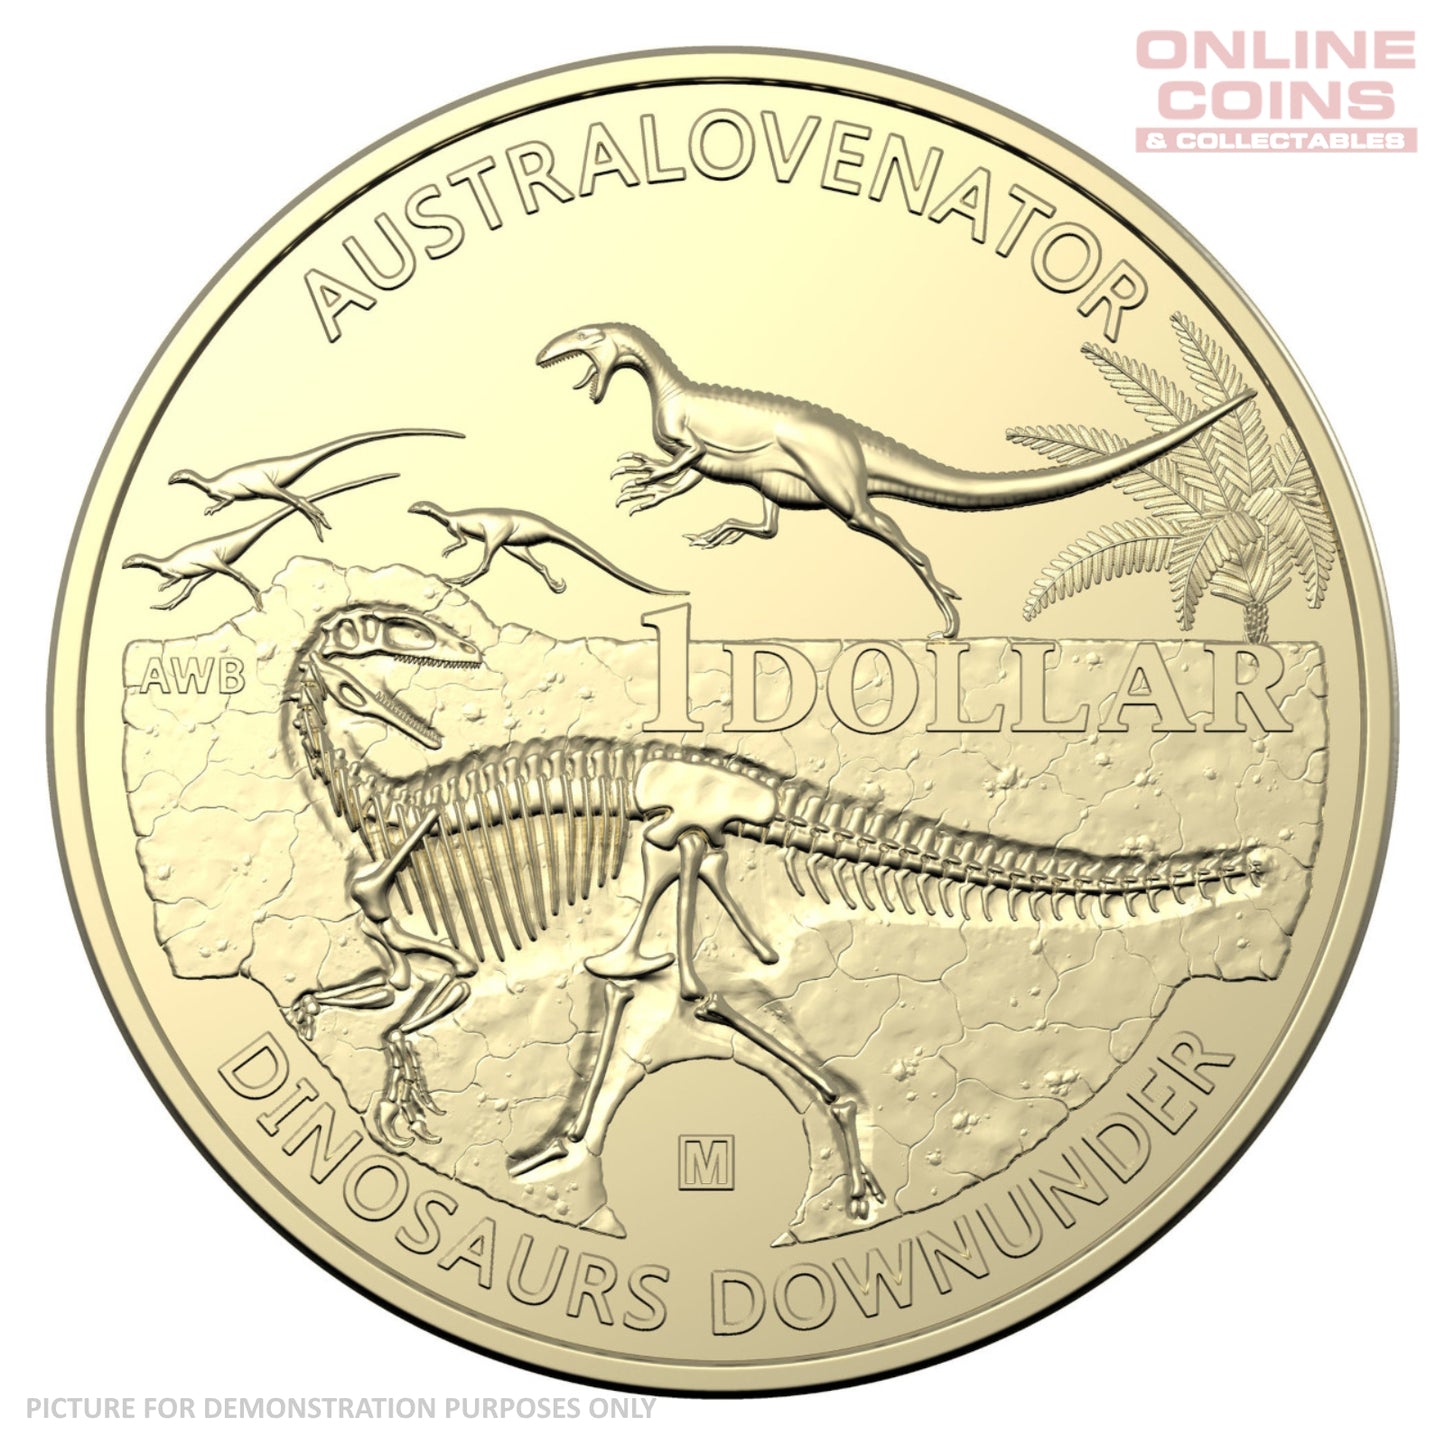 2022 Royal Australian Mint - Australian Dinosaurs - $1 AlBr Mintmark and Privy Mark Uncirculated 4 Coin Set